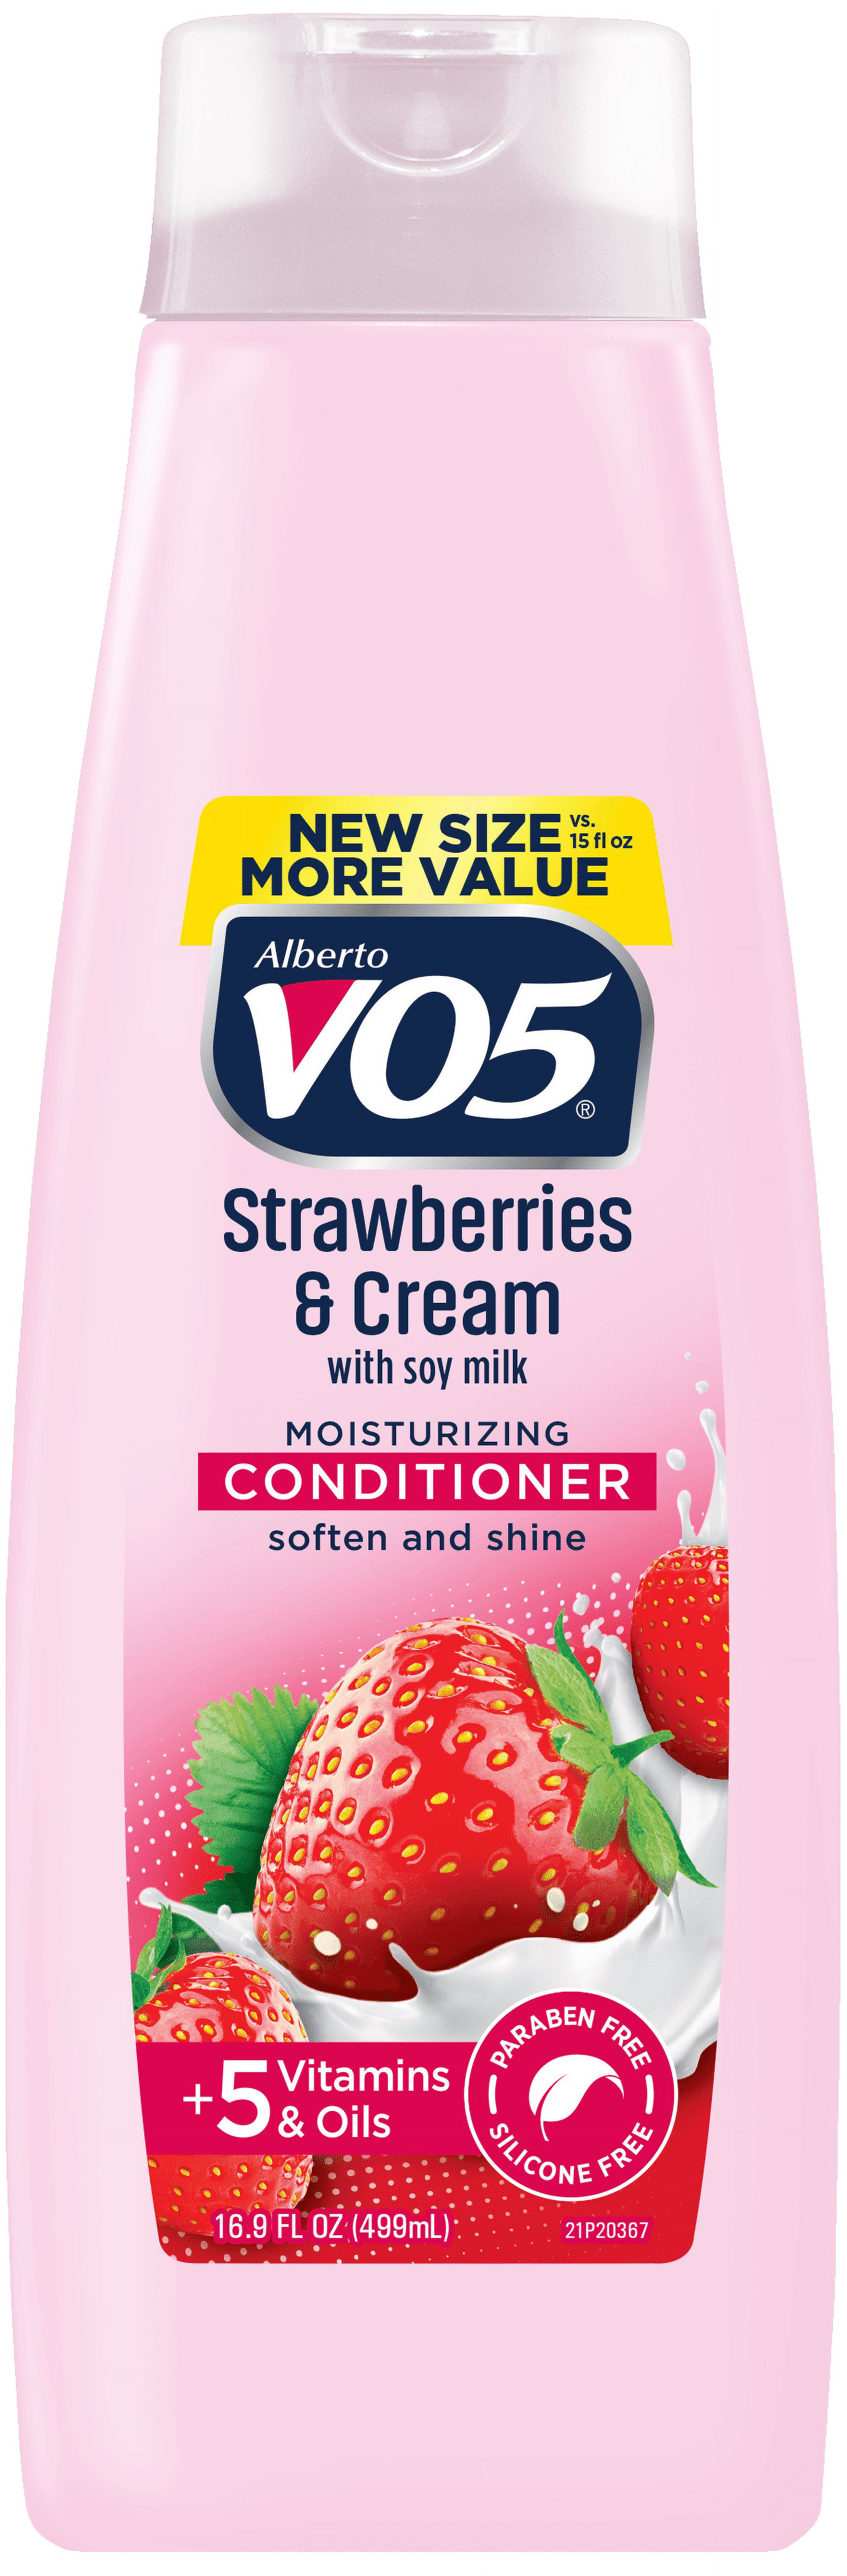 Alberto VO5 Strawberries & Cream Moisturizing Conditioner, for All Hair Types, 16.9 fl oz - image 1 of 6